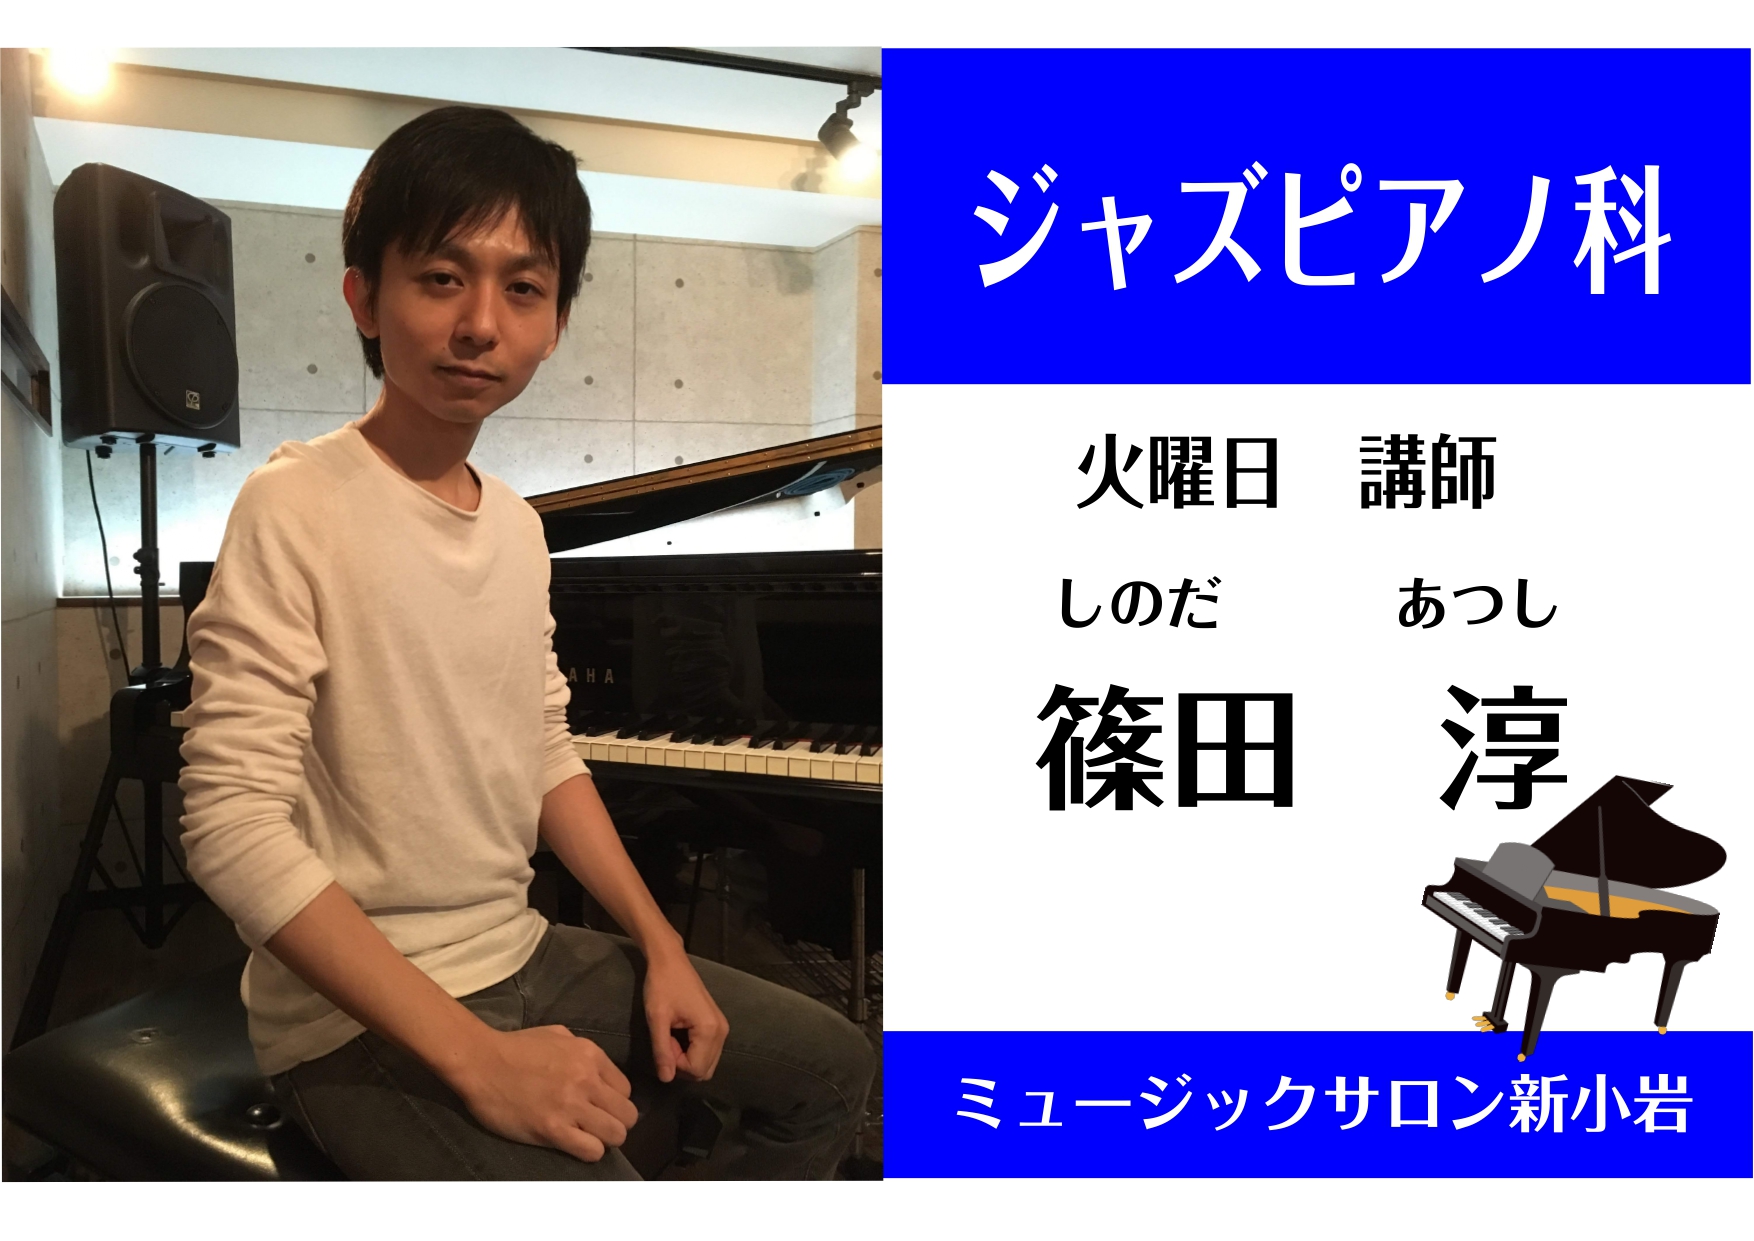 *Atsushi Shinoda **Profile Atsushi Shinoda, a Tokyo based jazz piano player, is currently teaching at Music Salon Nishikasai along with other music sc […]